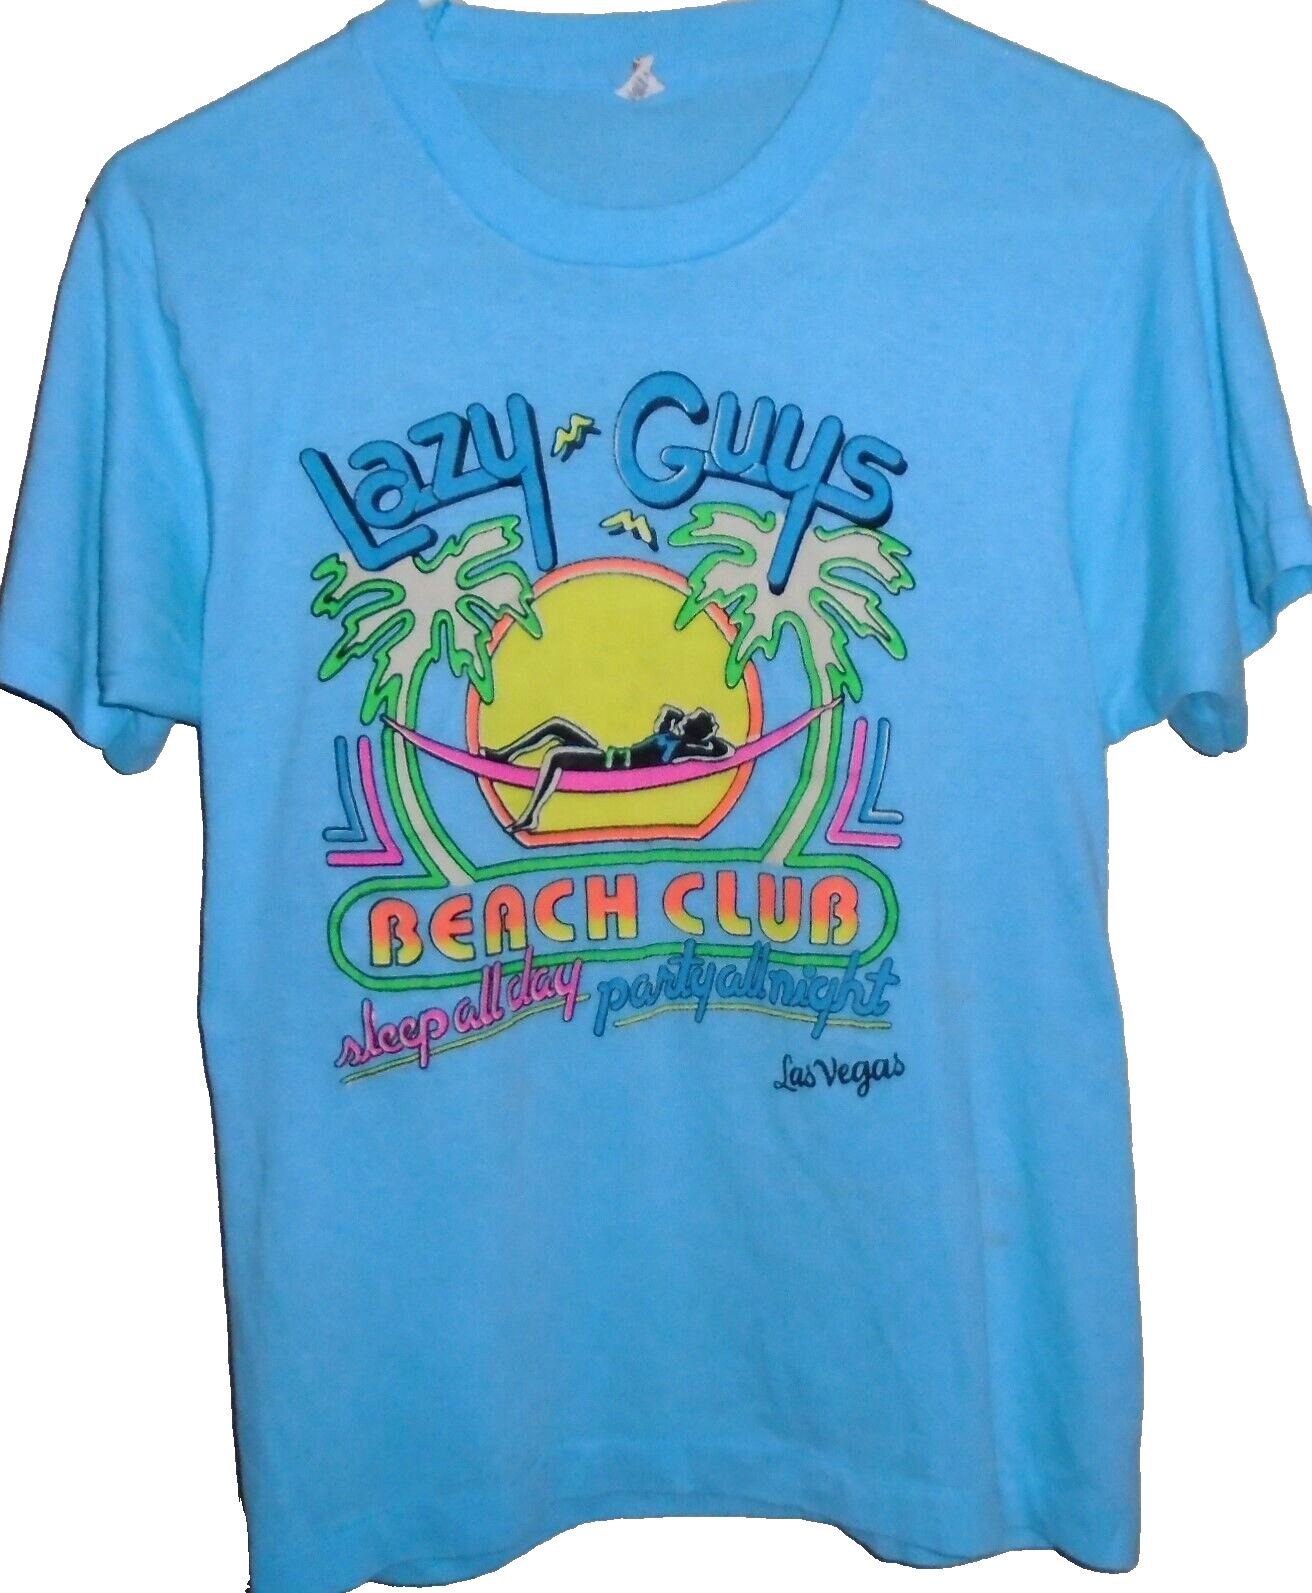 vintage 1980s Las Vegas Lazy Guys beach surf t shirt Medium